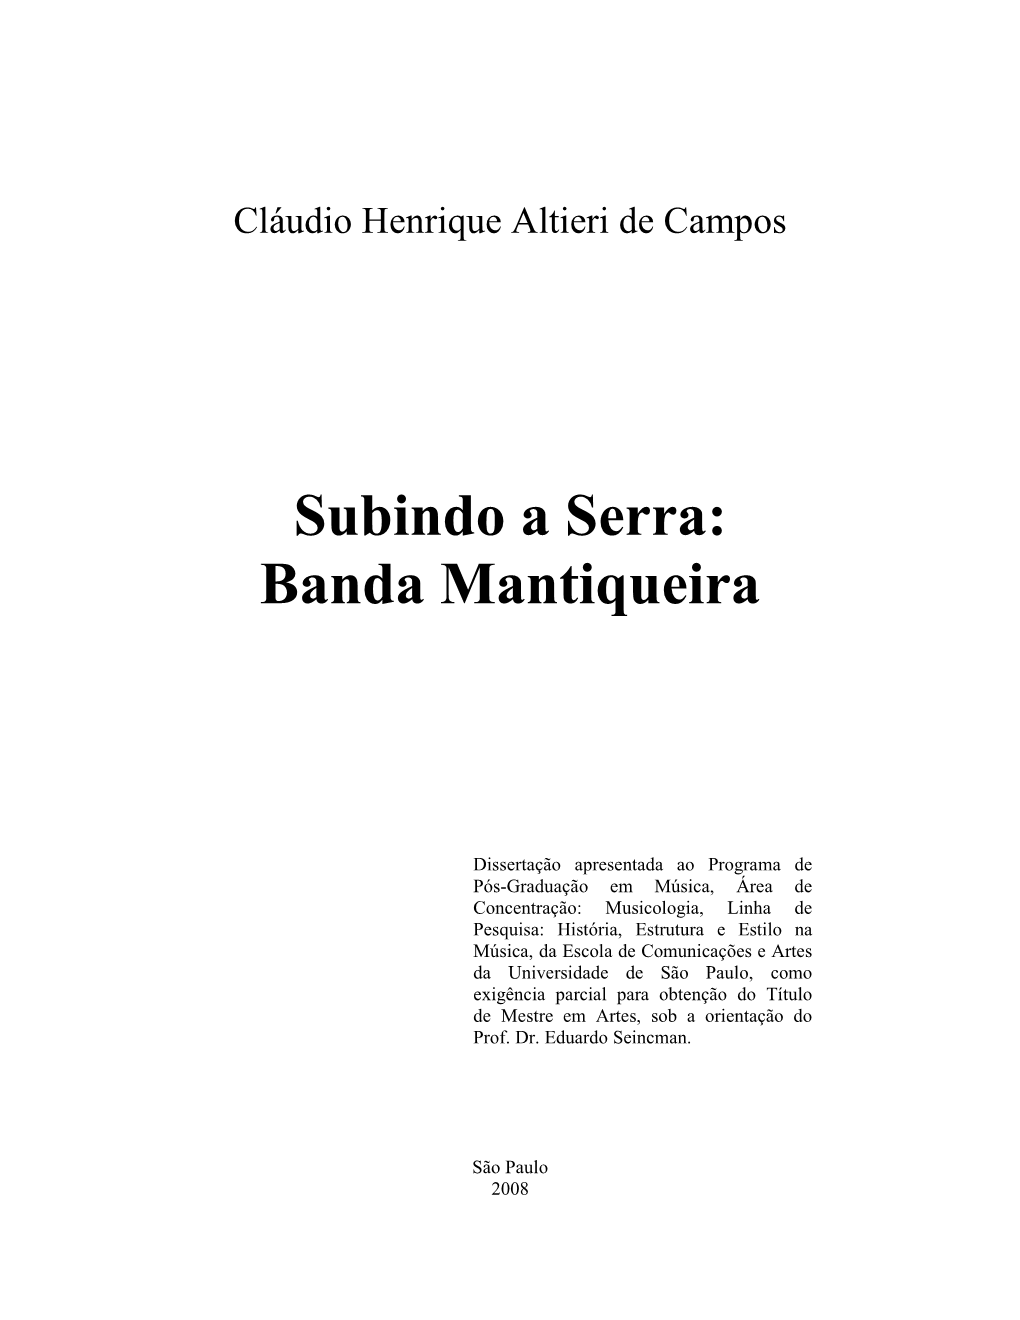 Subindo a Serra: Banda Mantiqueira